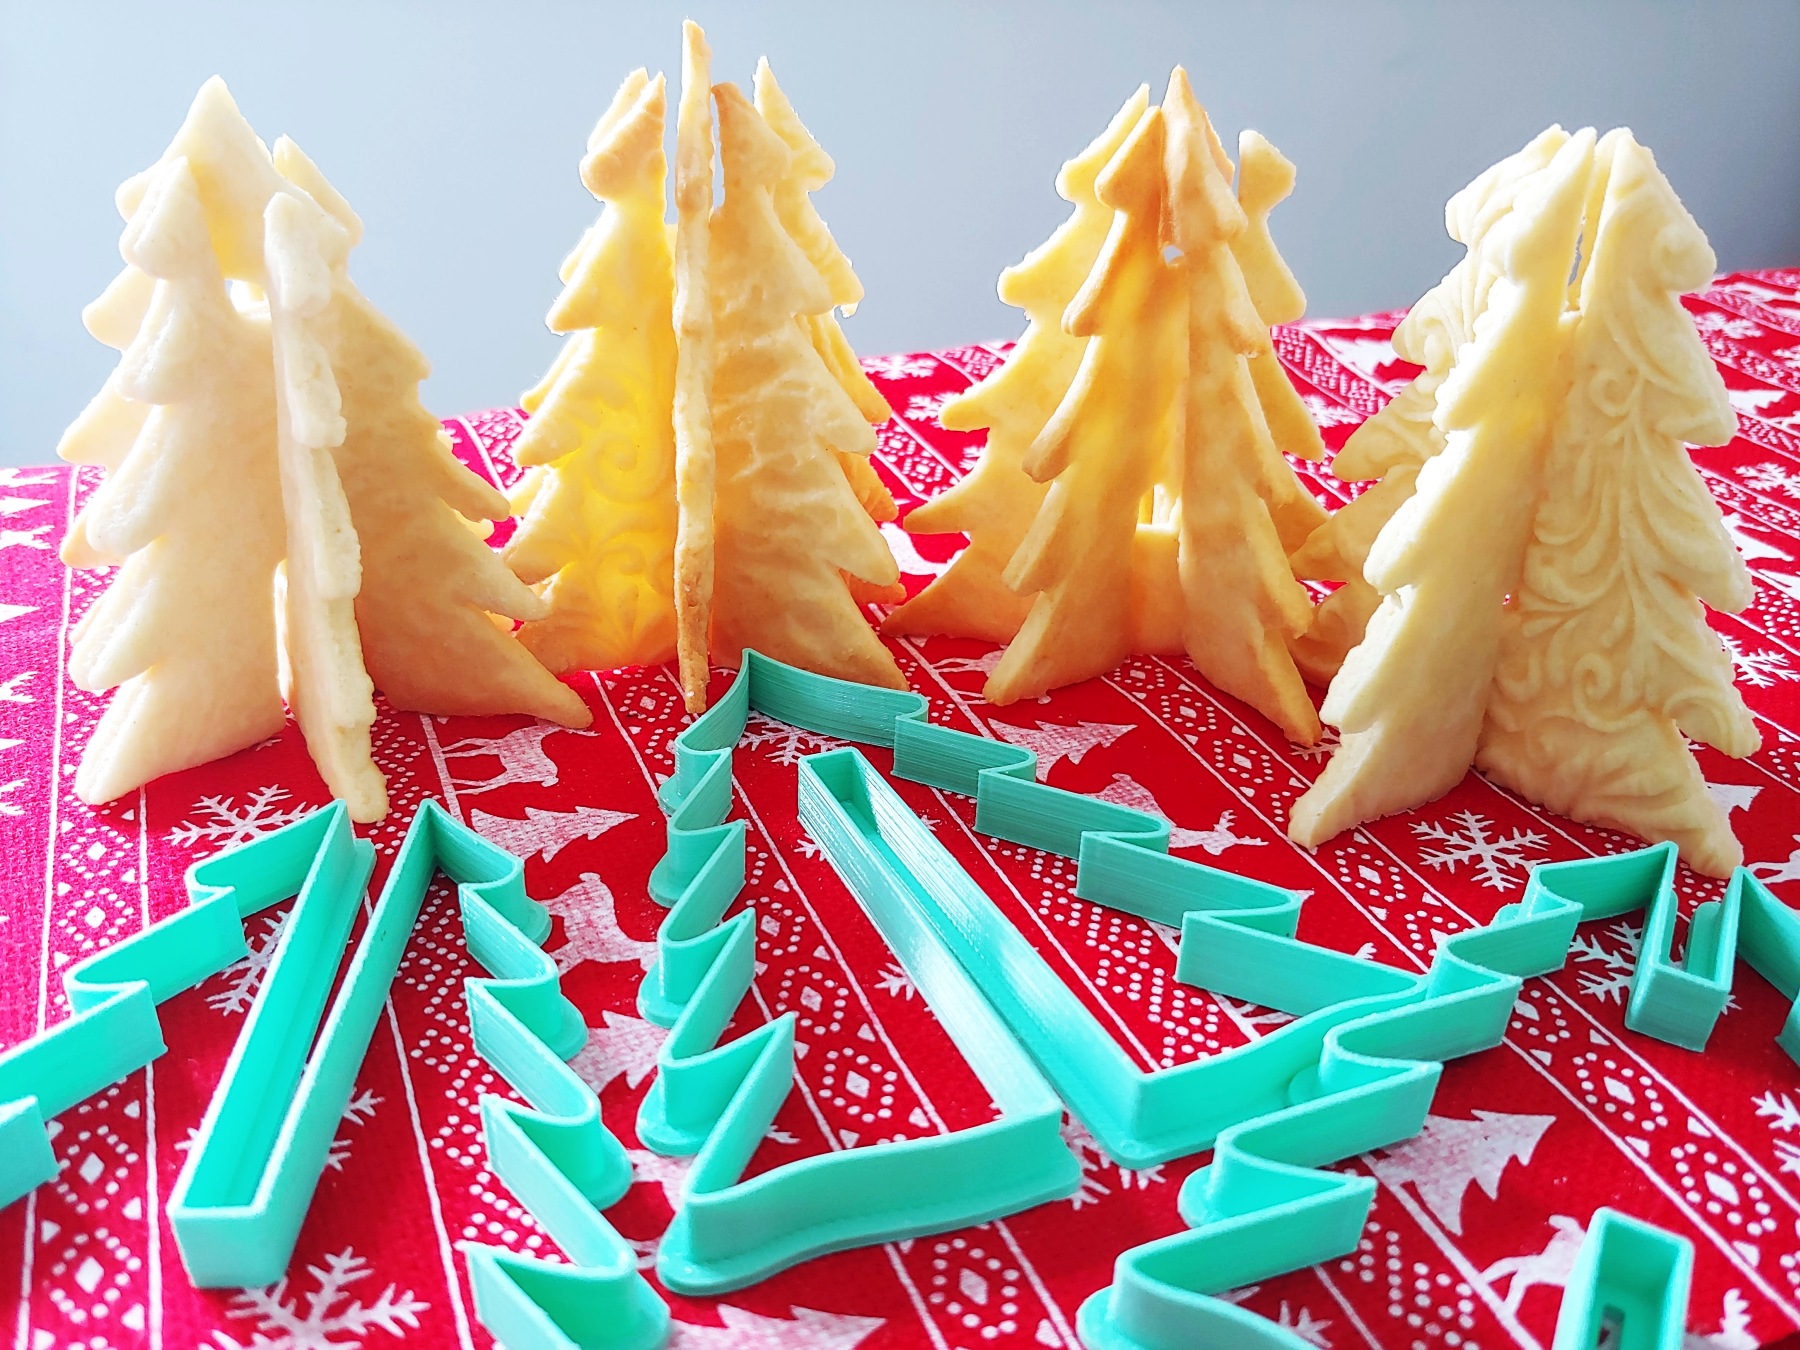 Giallo ZNABHNG Formine Biscotti Natalizie 3D Natale 18 Pezzi Stampi in Acciaio Inossidabile 3D Stampi Biscotti Natalizio Formine per Biscotti per Bambini DIY 